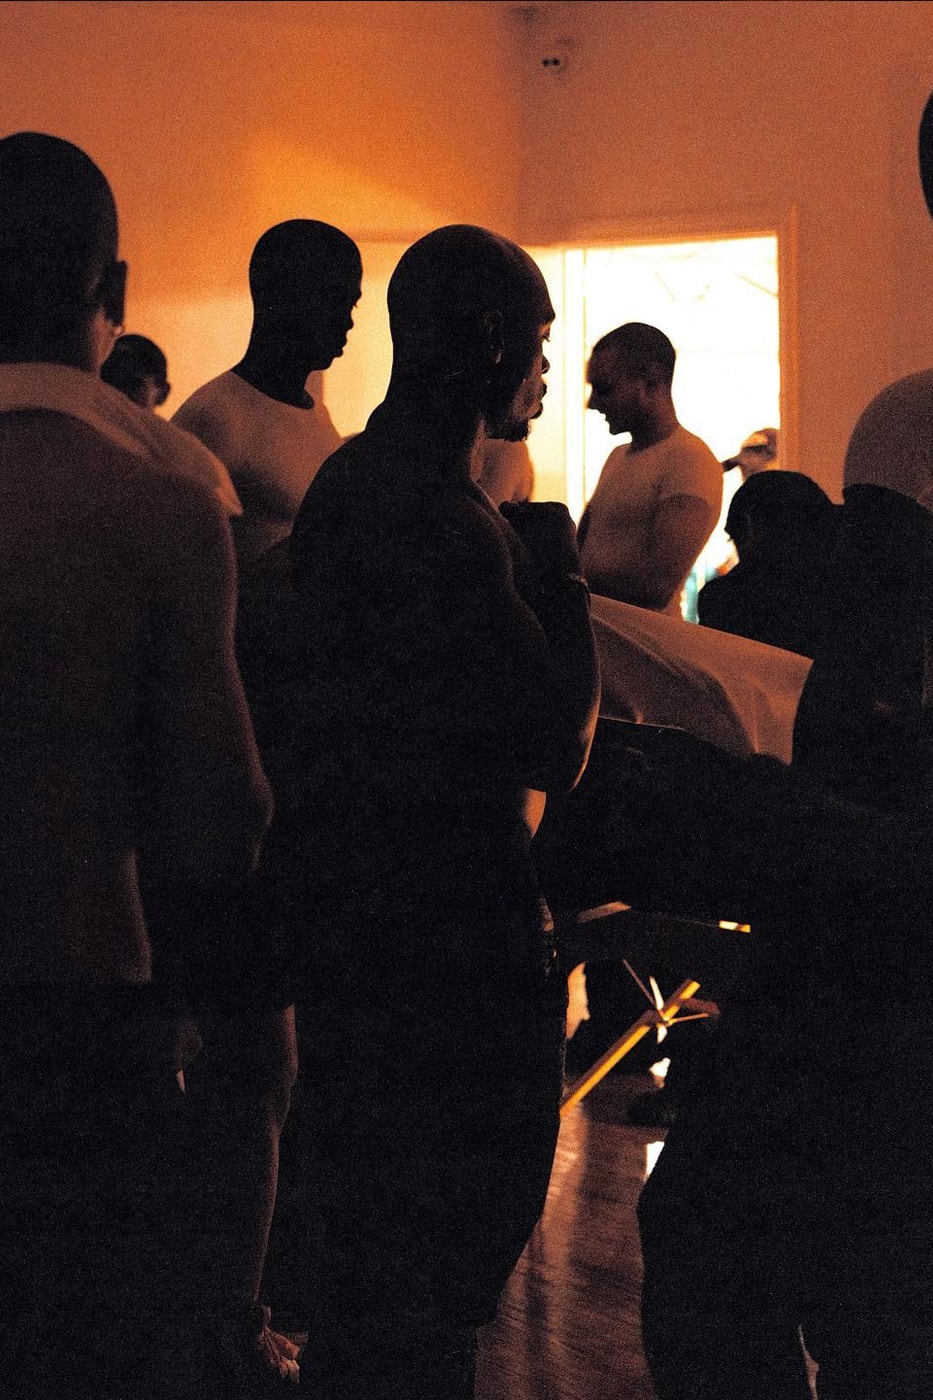 Yeezy Season 10 secret showcase bald shave head white tee casting los angeles onda info